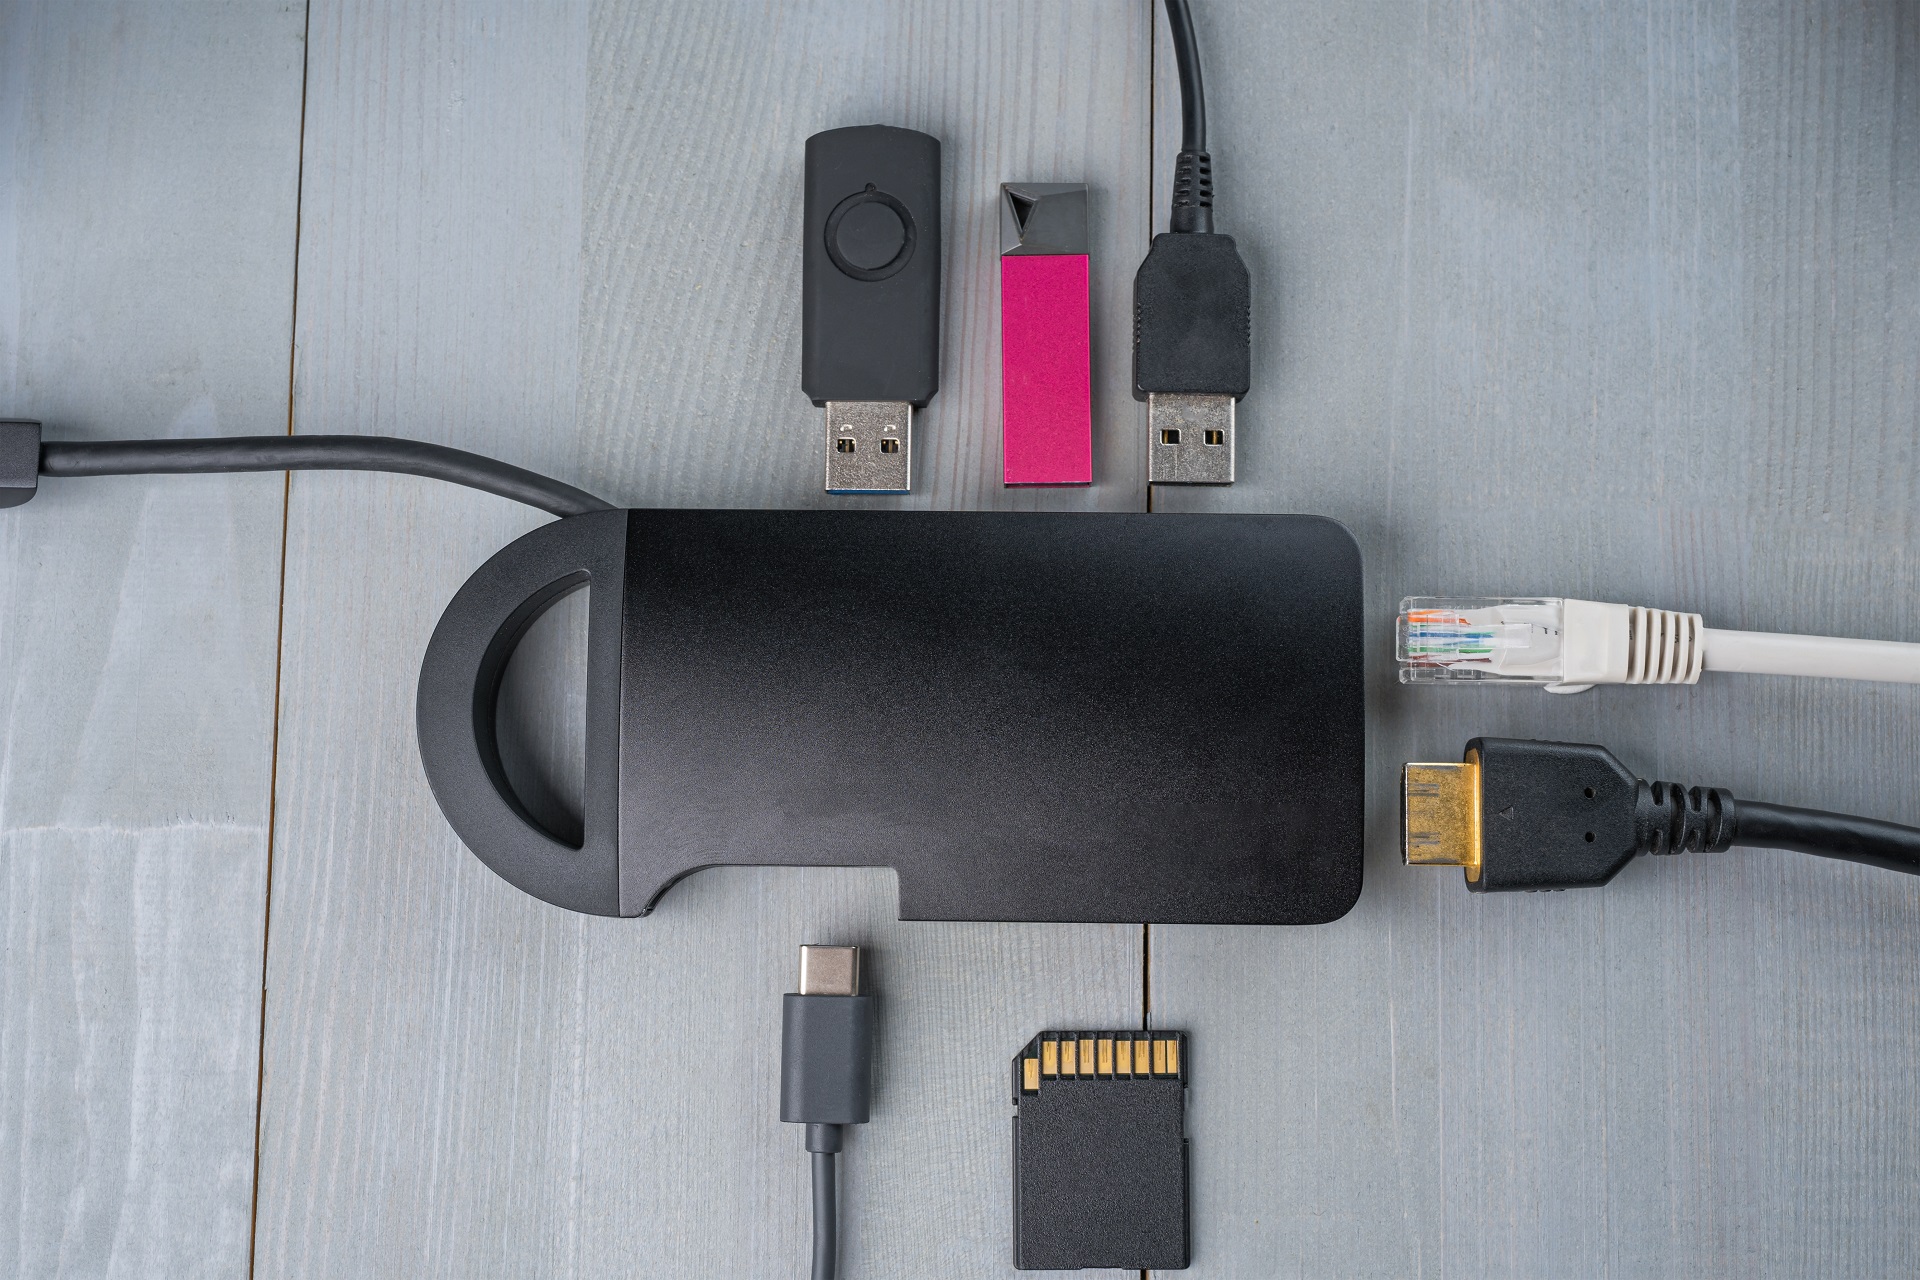 USB type C desktop chargers